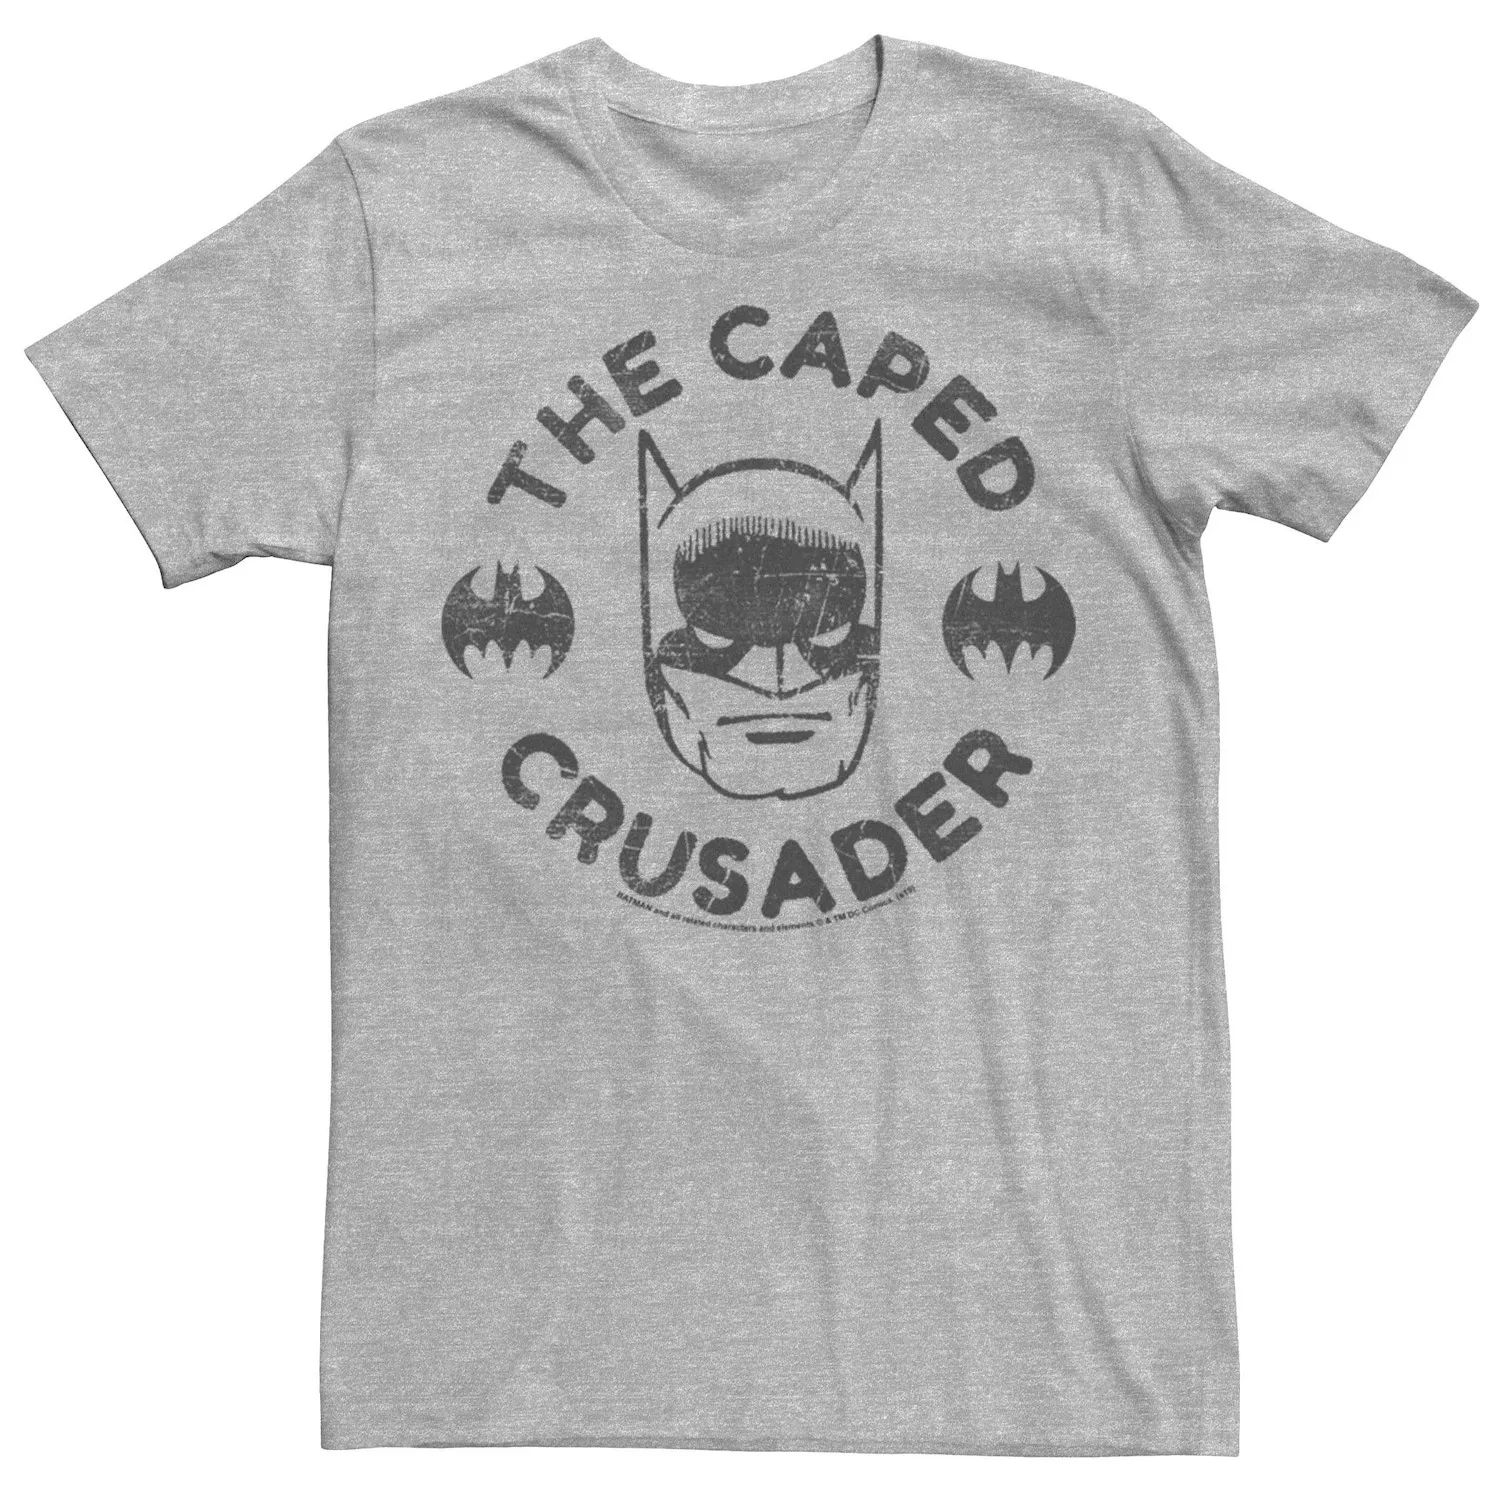 цена Мужская футболка с надписью Batman Crusader Bigface DC Comics